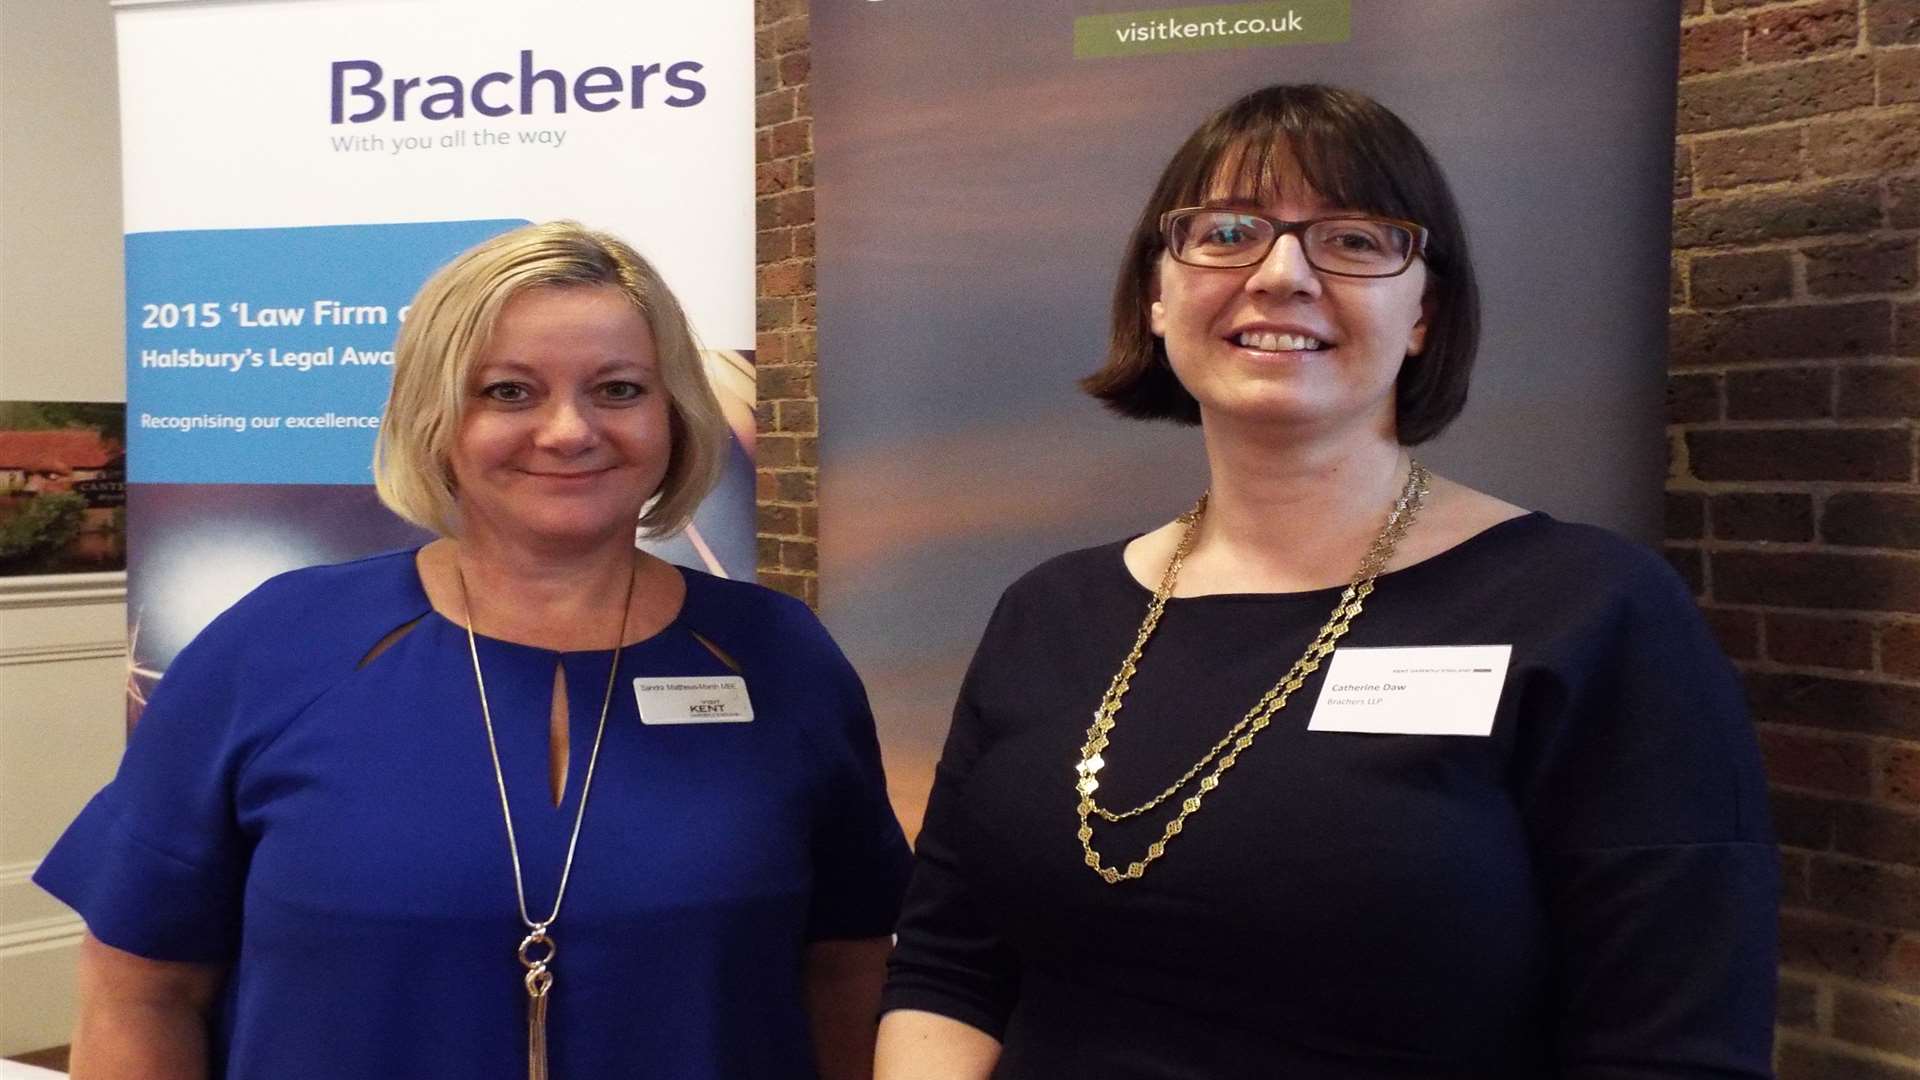 Visit Kent chief executive Sandra Matthews-Marsh, left, and Brachers partner Catherine Daw